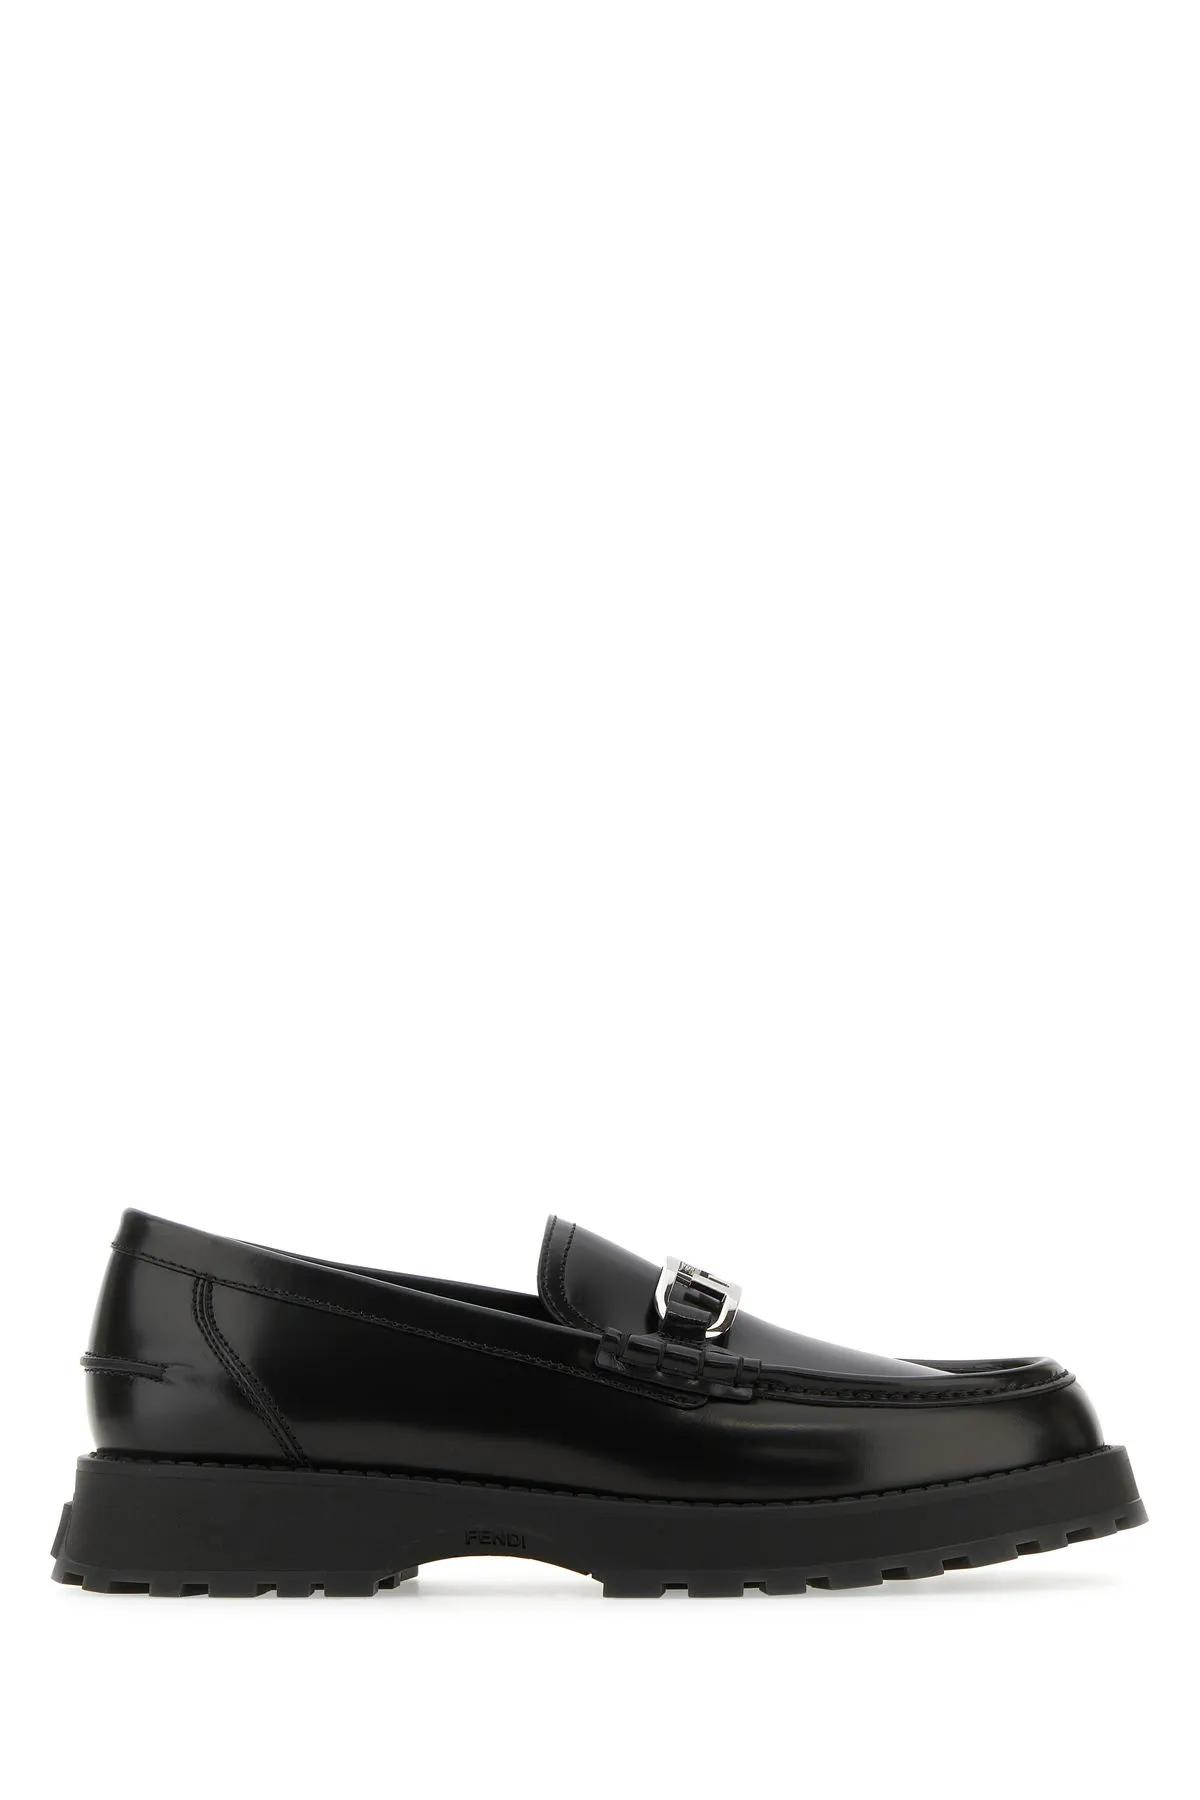 Fendi Black Leather Oclock Loafers In Nero